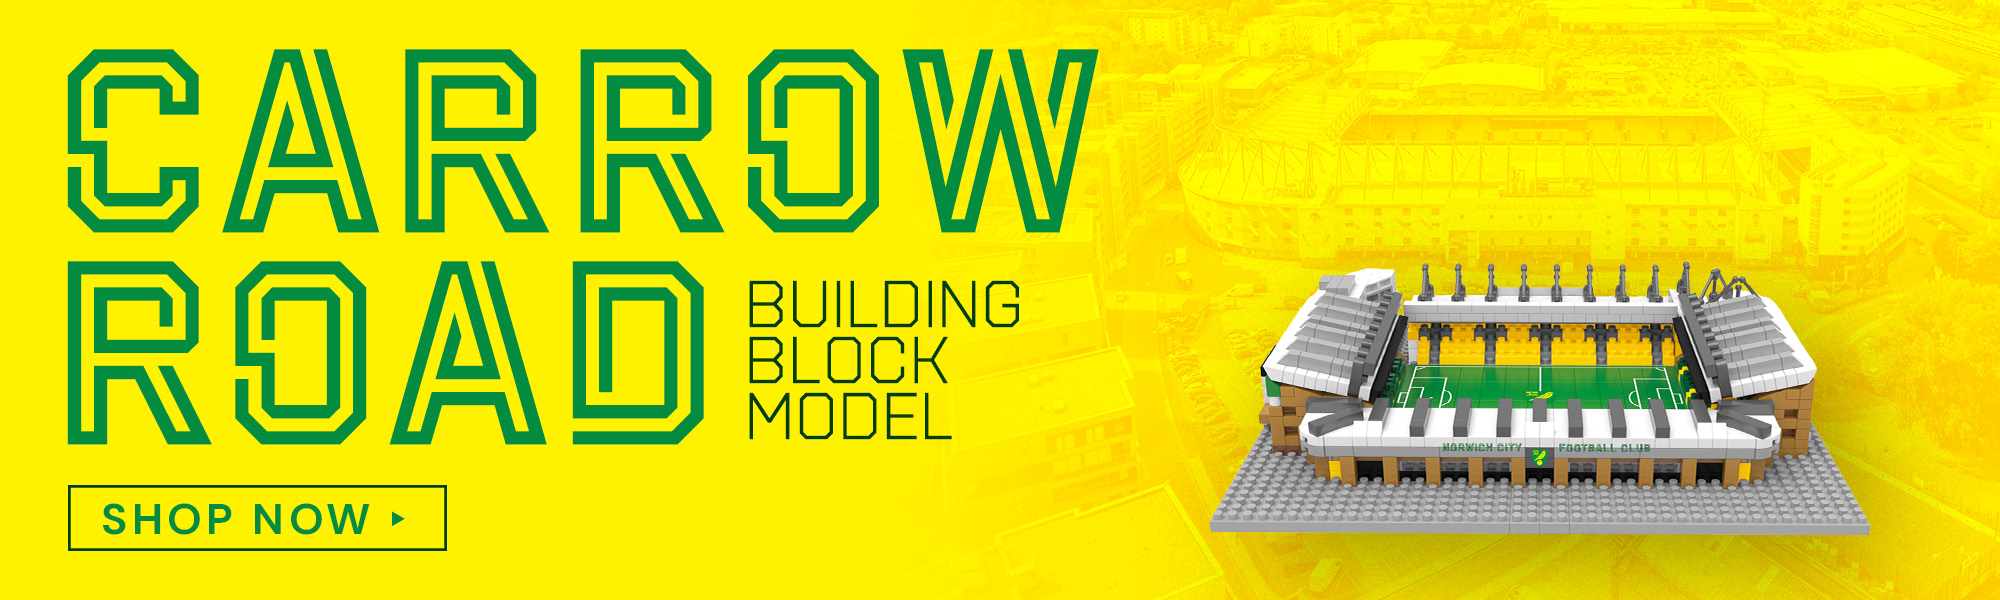 Carrow Road Building Block Model | Shop Now